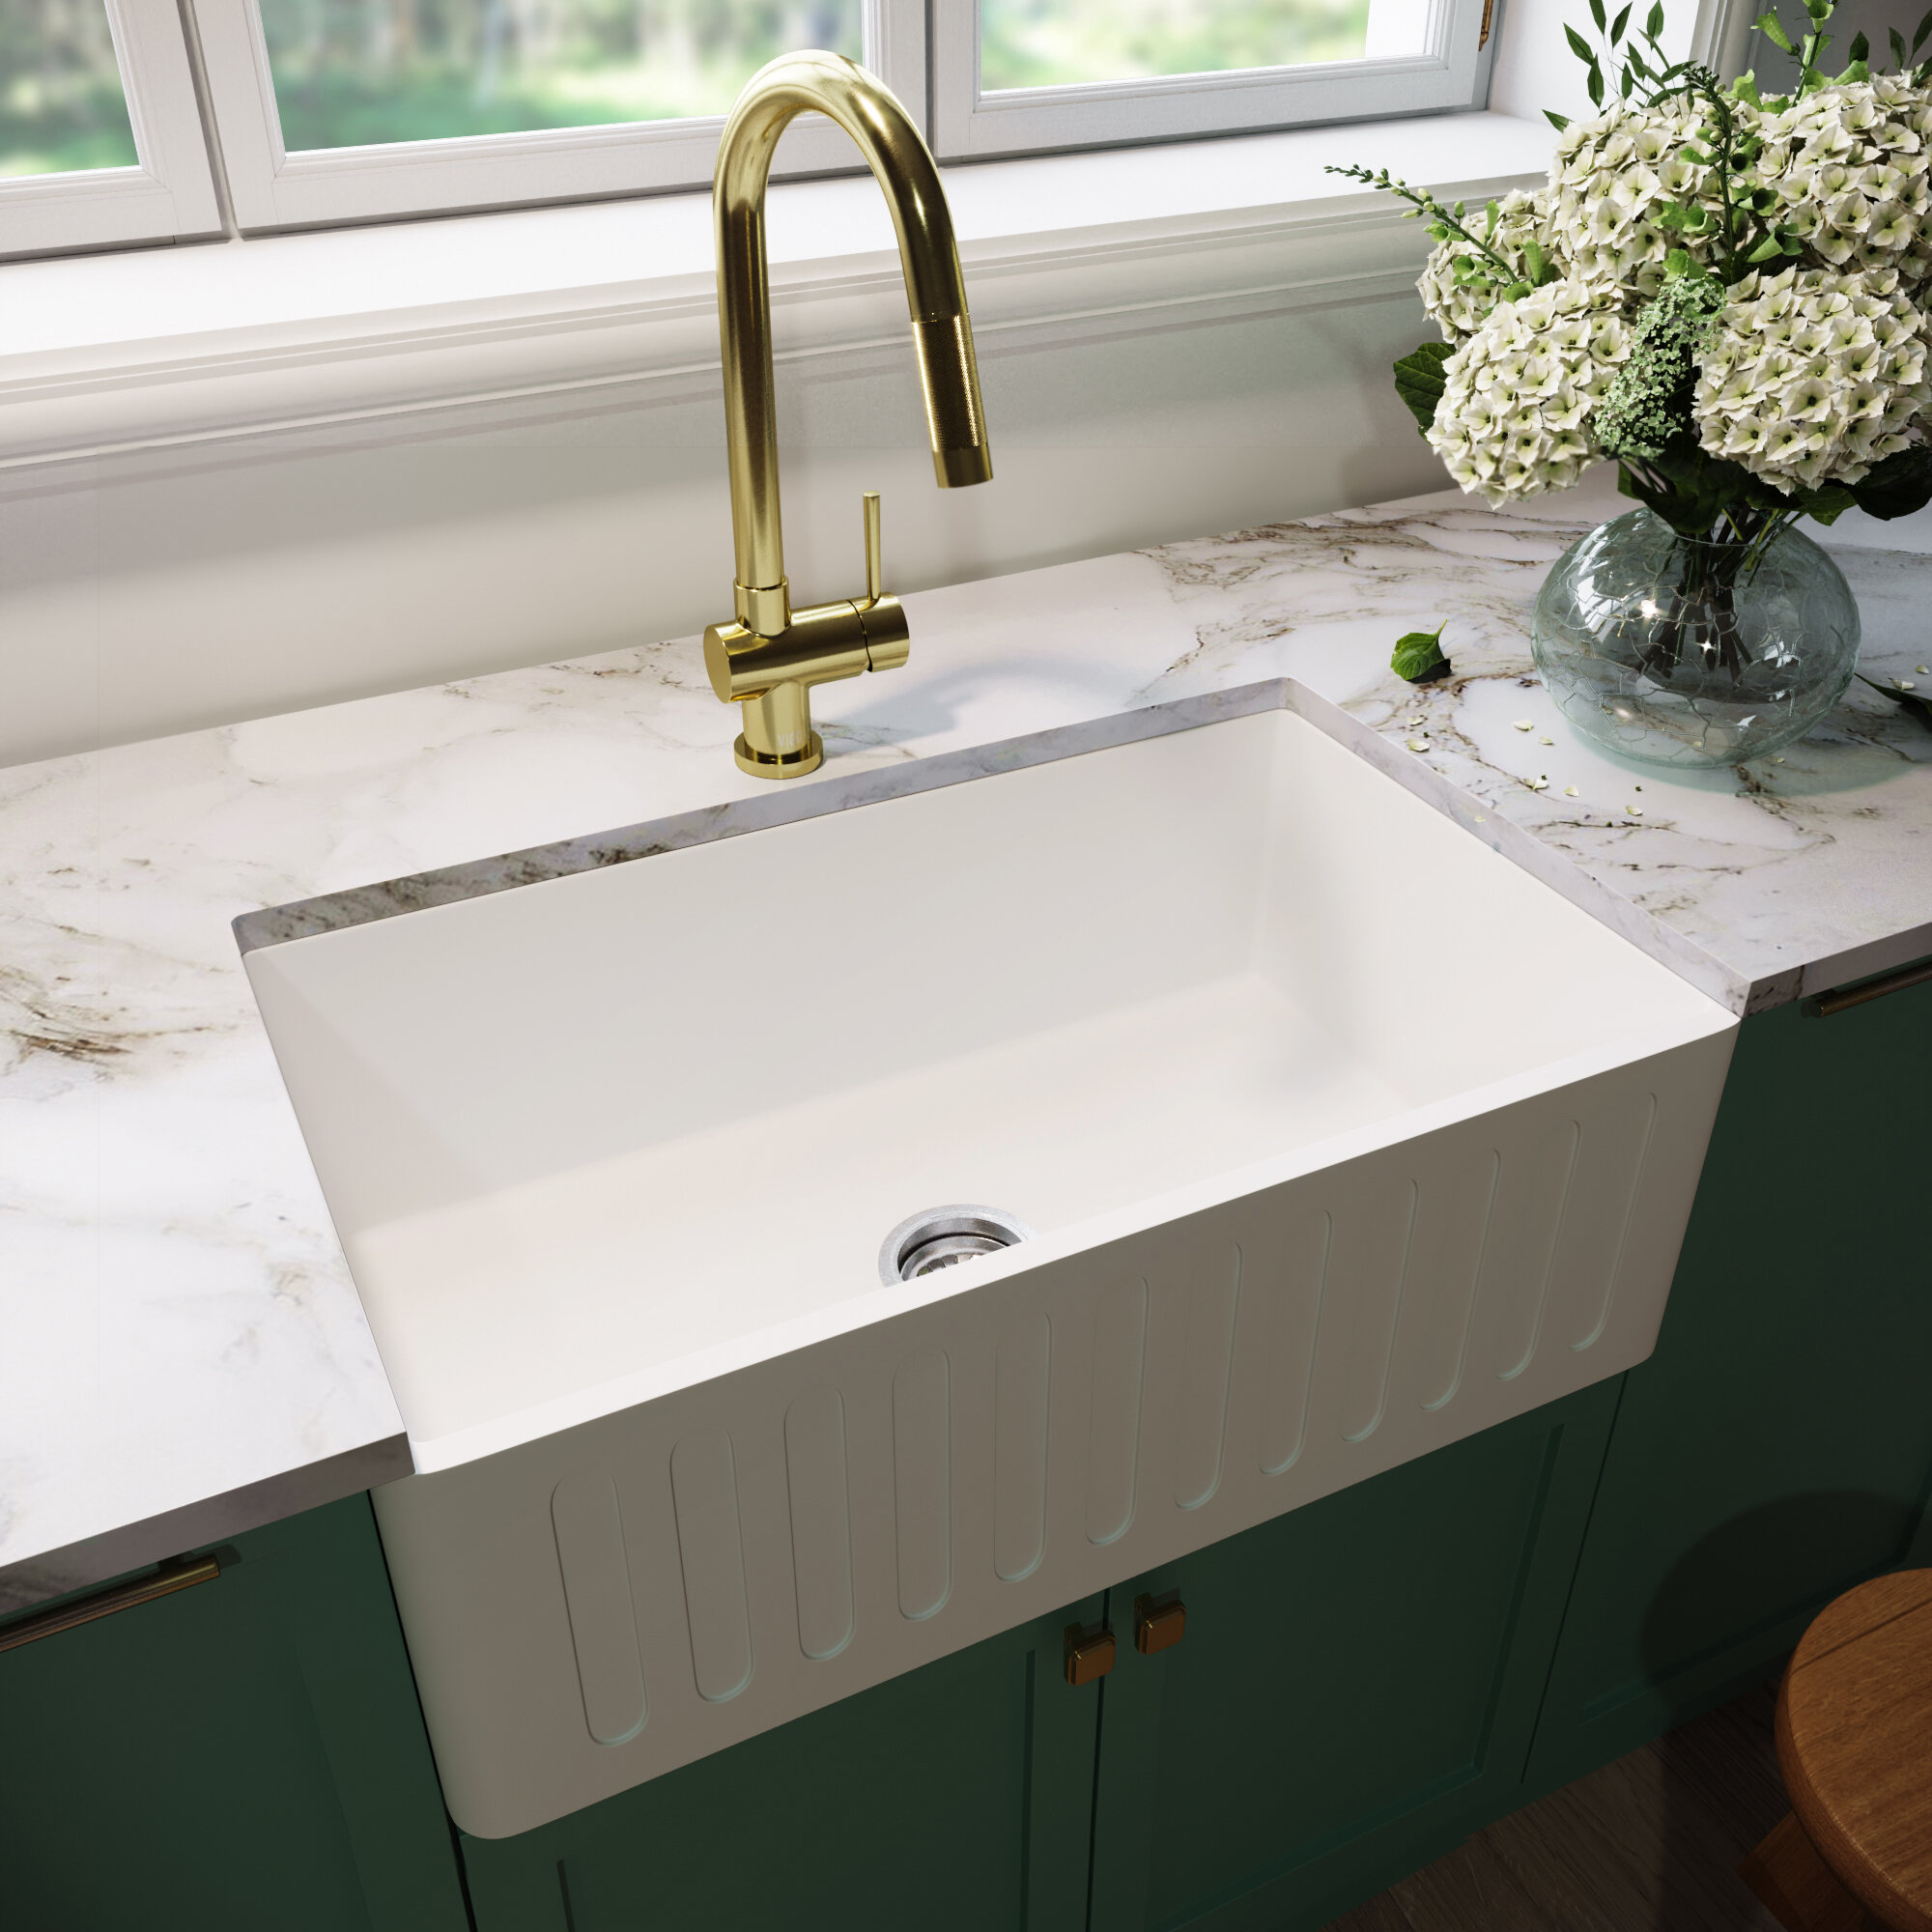 Vigo Matte Stone 30 L X 18 W Farmhouse Kitchen Sink With Basket Strainer Reviews Wayfair